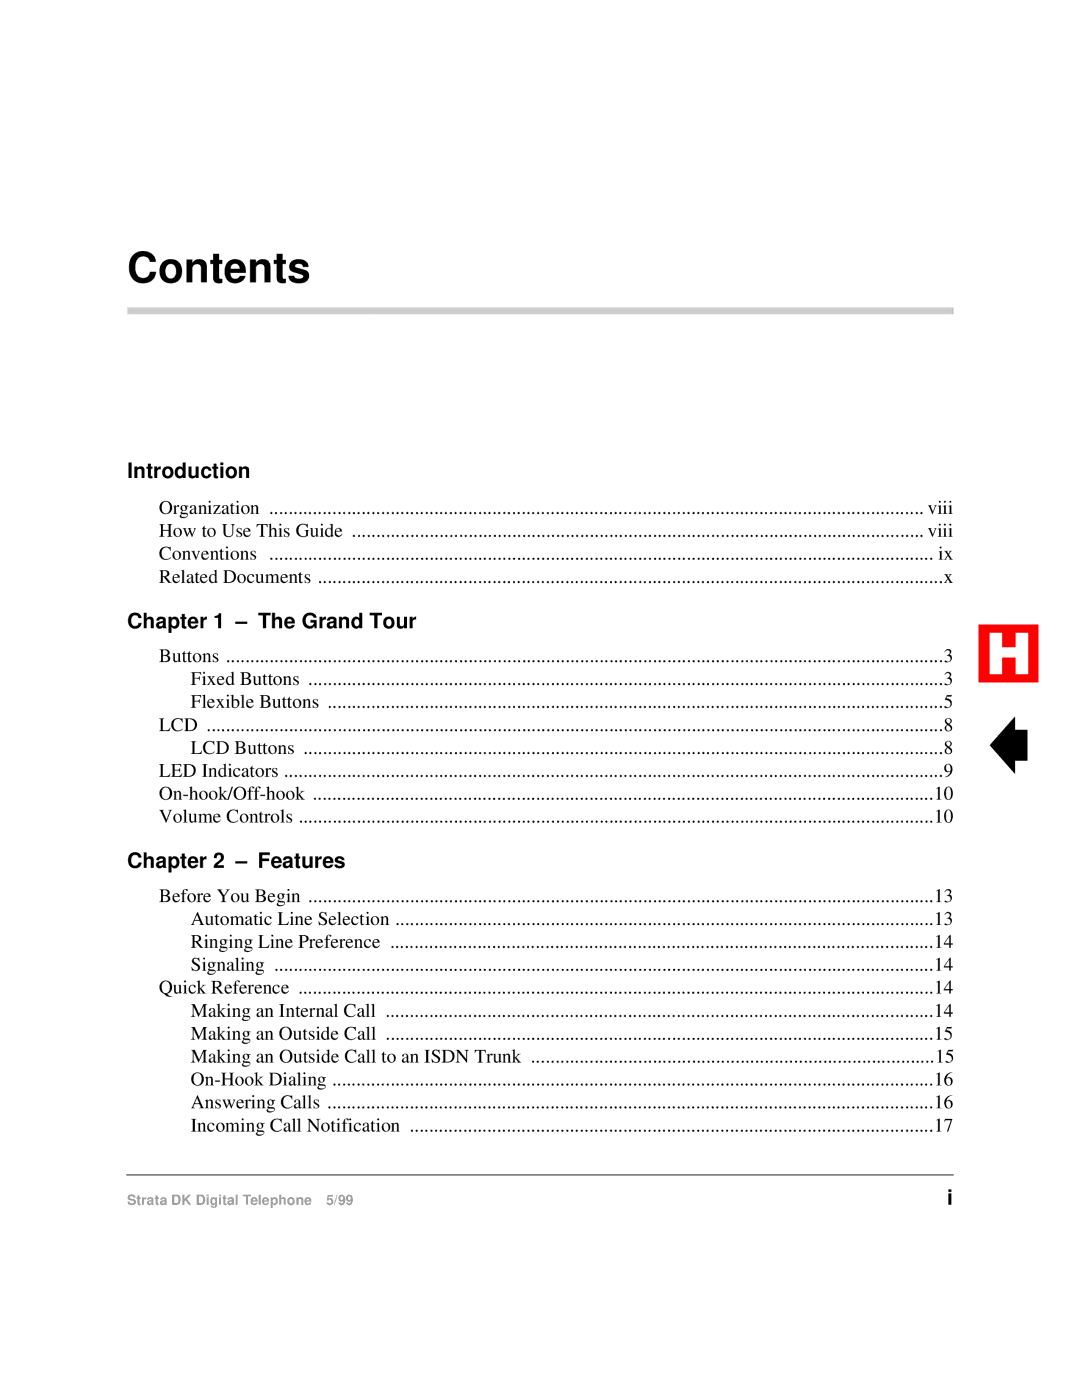 Toshiba Digital Telephone manual Contents 